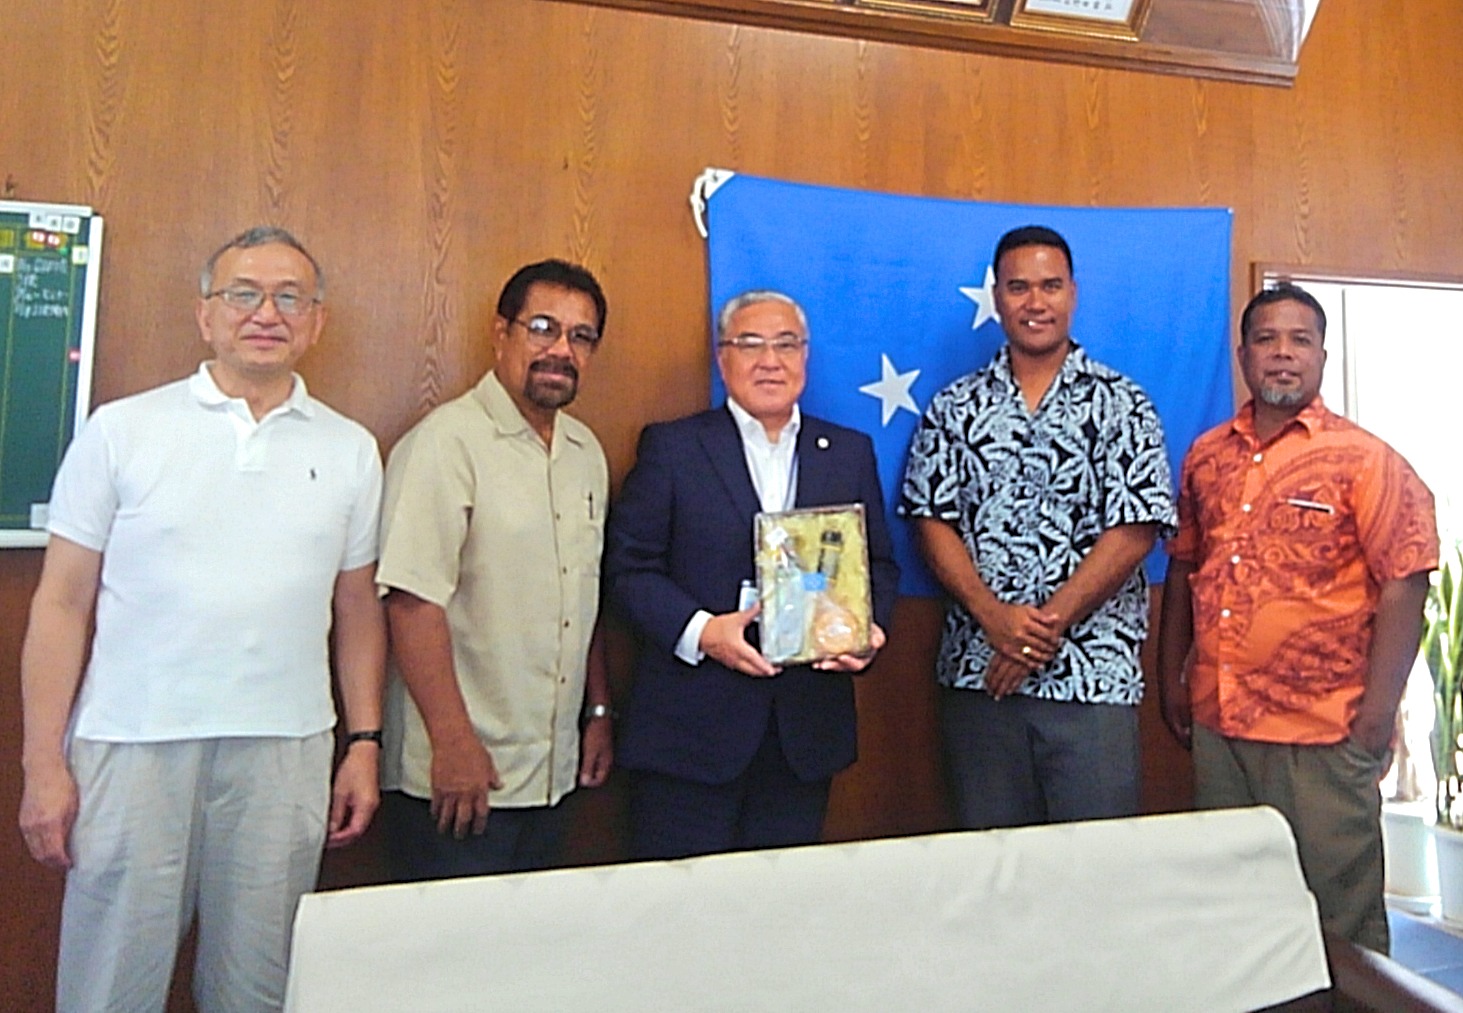 Pacific Leaders Invitation Program: Federated States of Micronesia Chuuk State Young Leader Invitation Program I